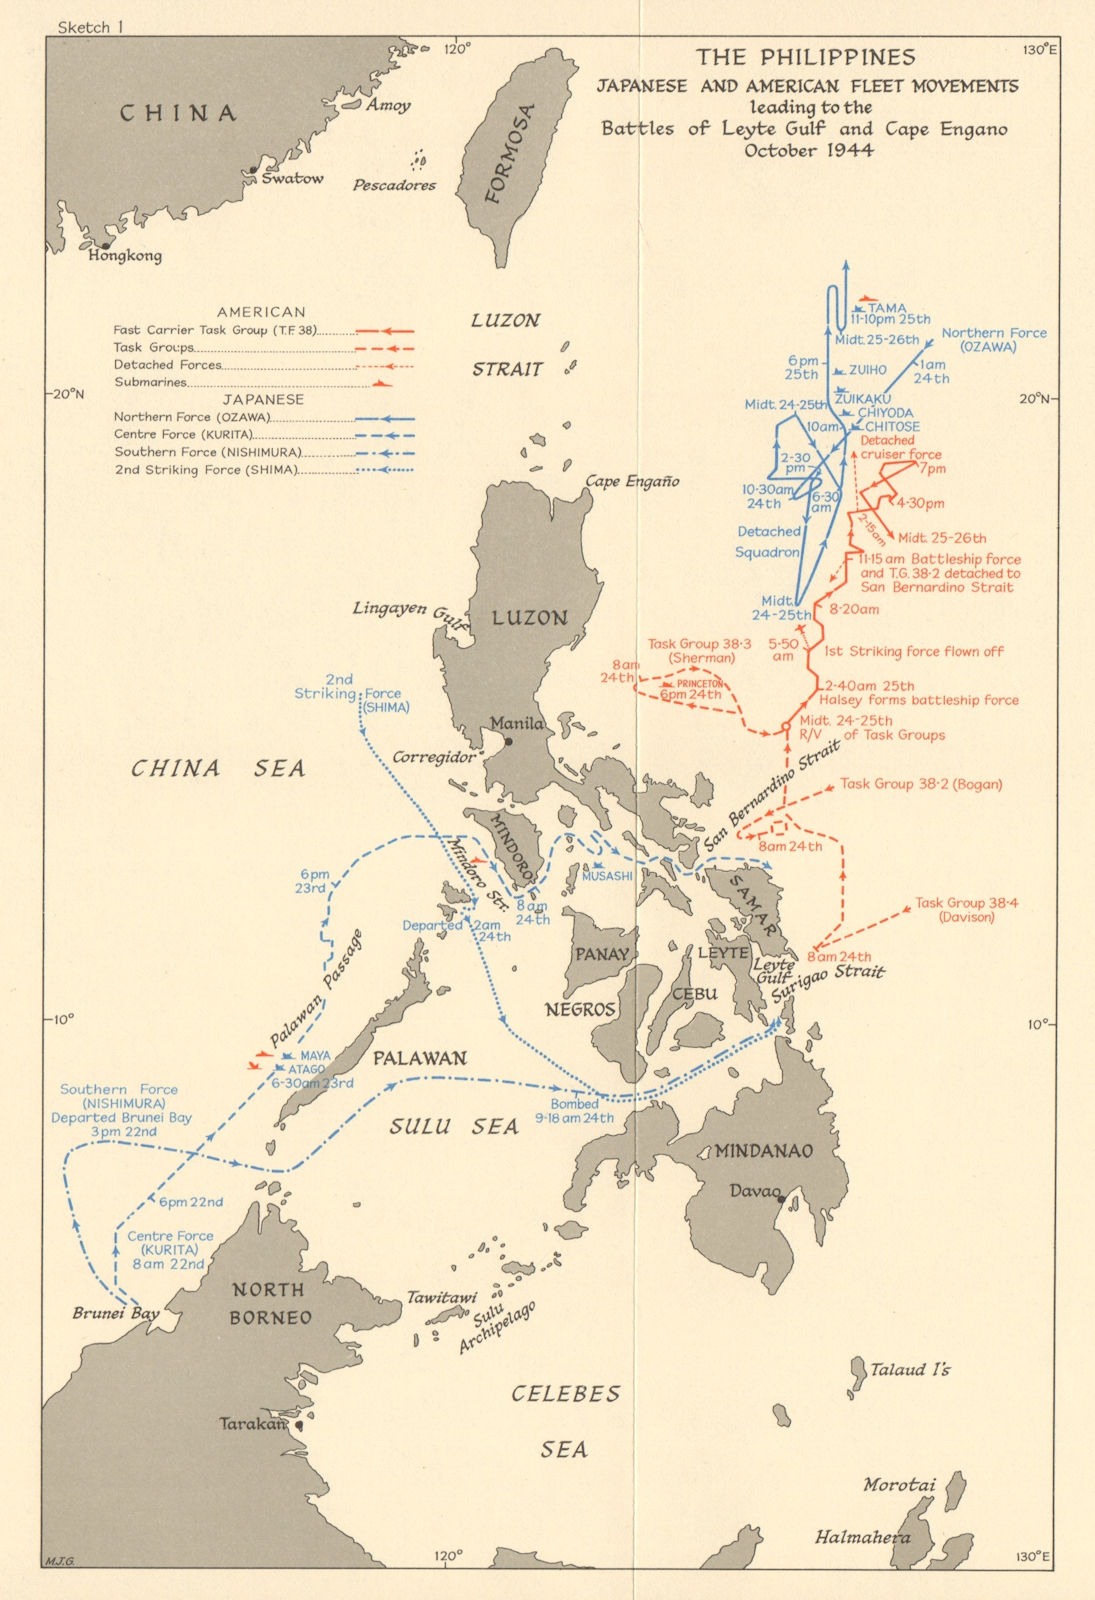 Philippines. Fleet movements. 1944 Battles of Leyte Gulf & Cape Engano 1965 map